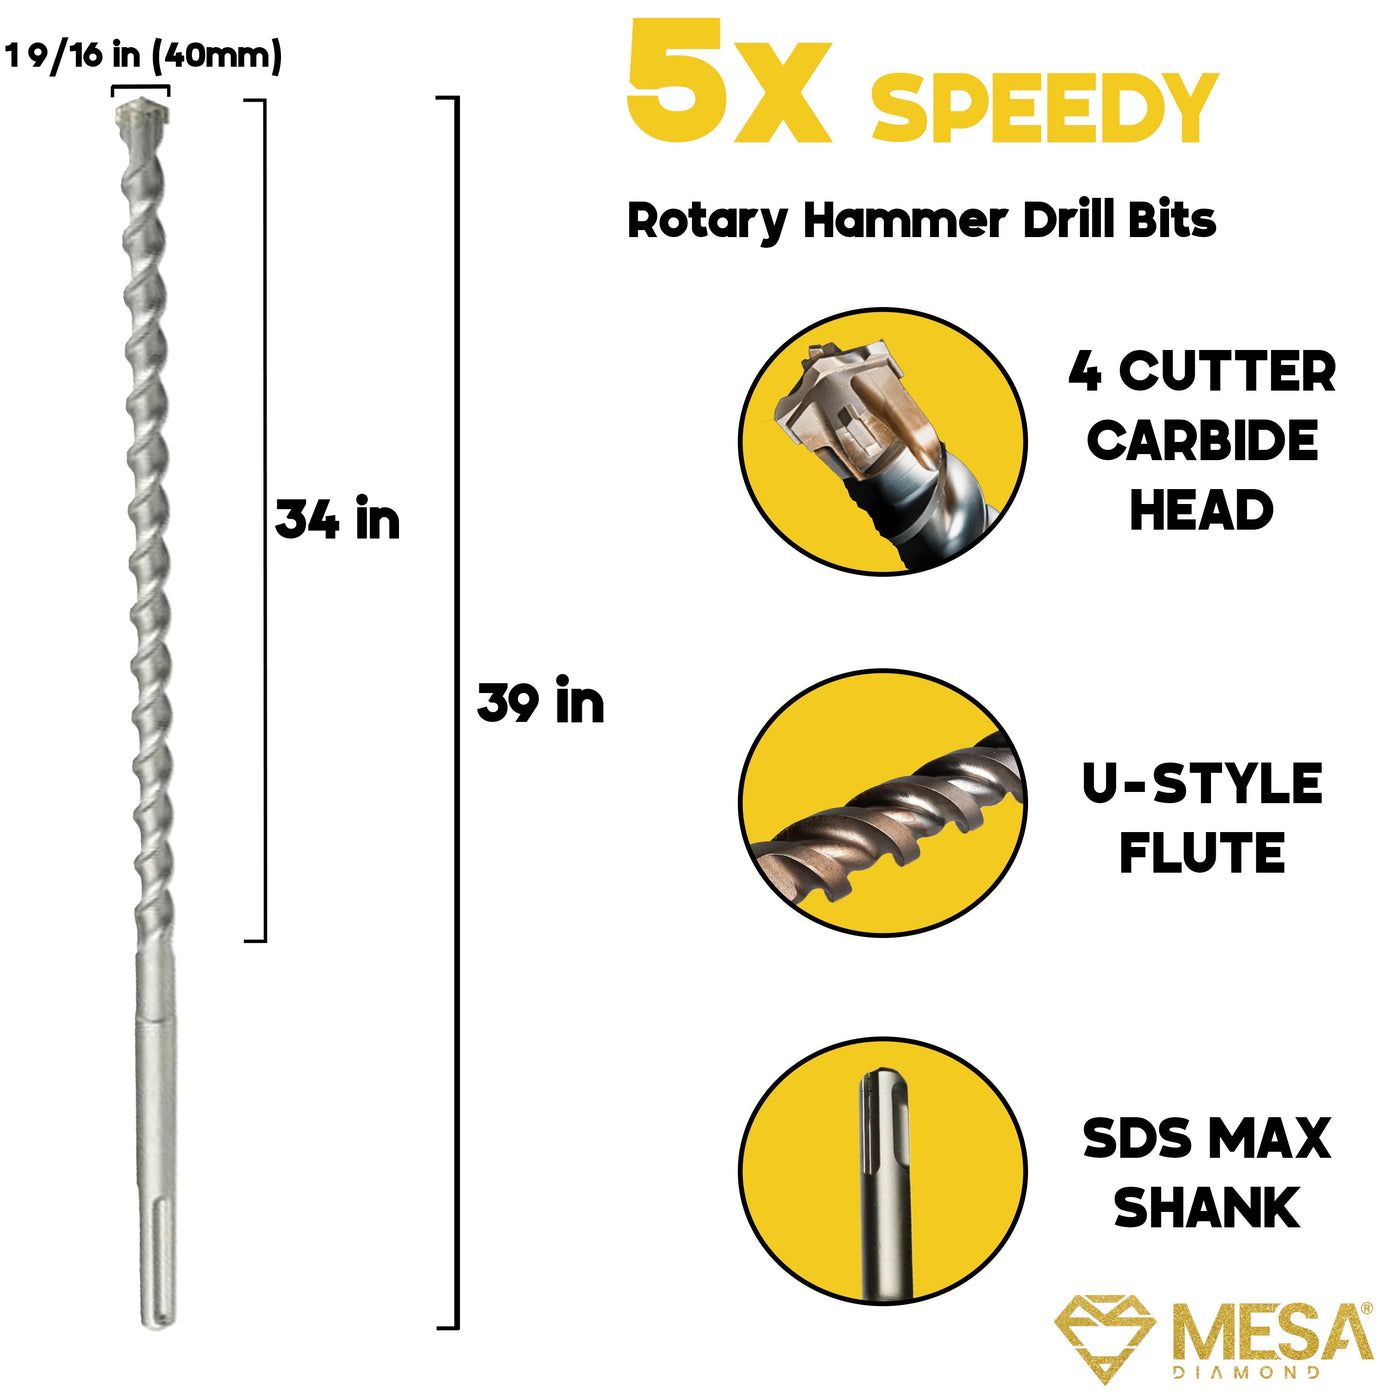 4 CUTTER SDS MAX Masonry Drill BitMESA DIAMOND®4SDSMAX40391 9/16 in (40mm)1 9/16 in (40mm)39 in